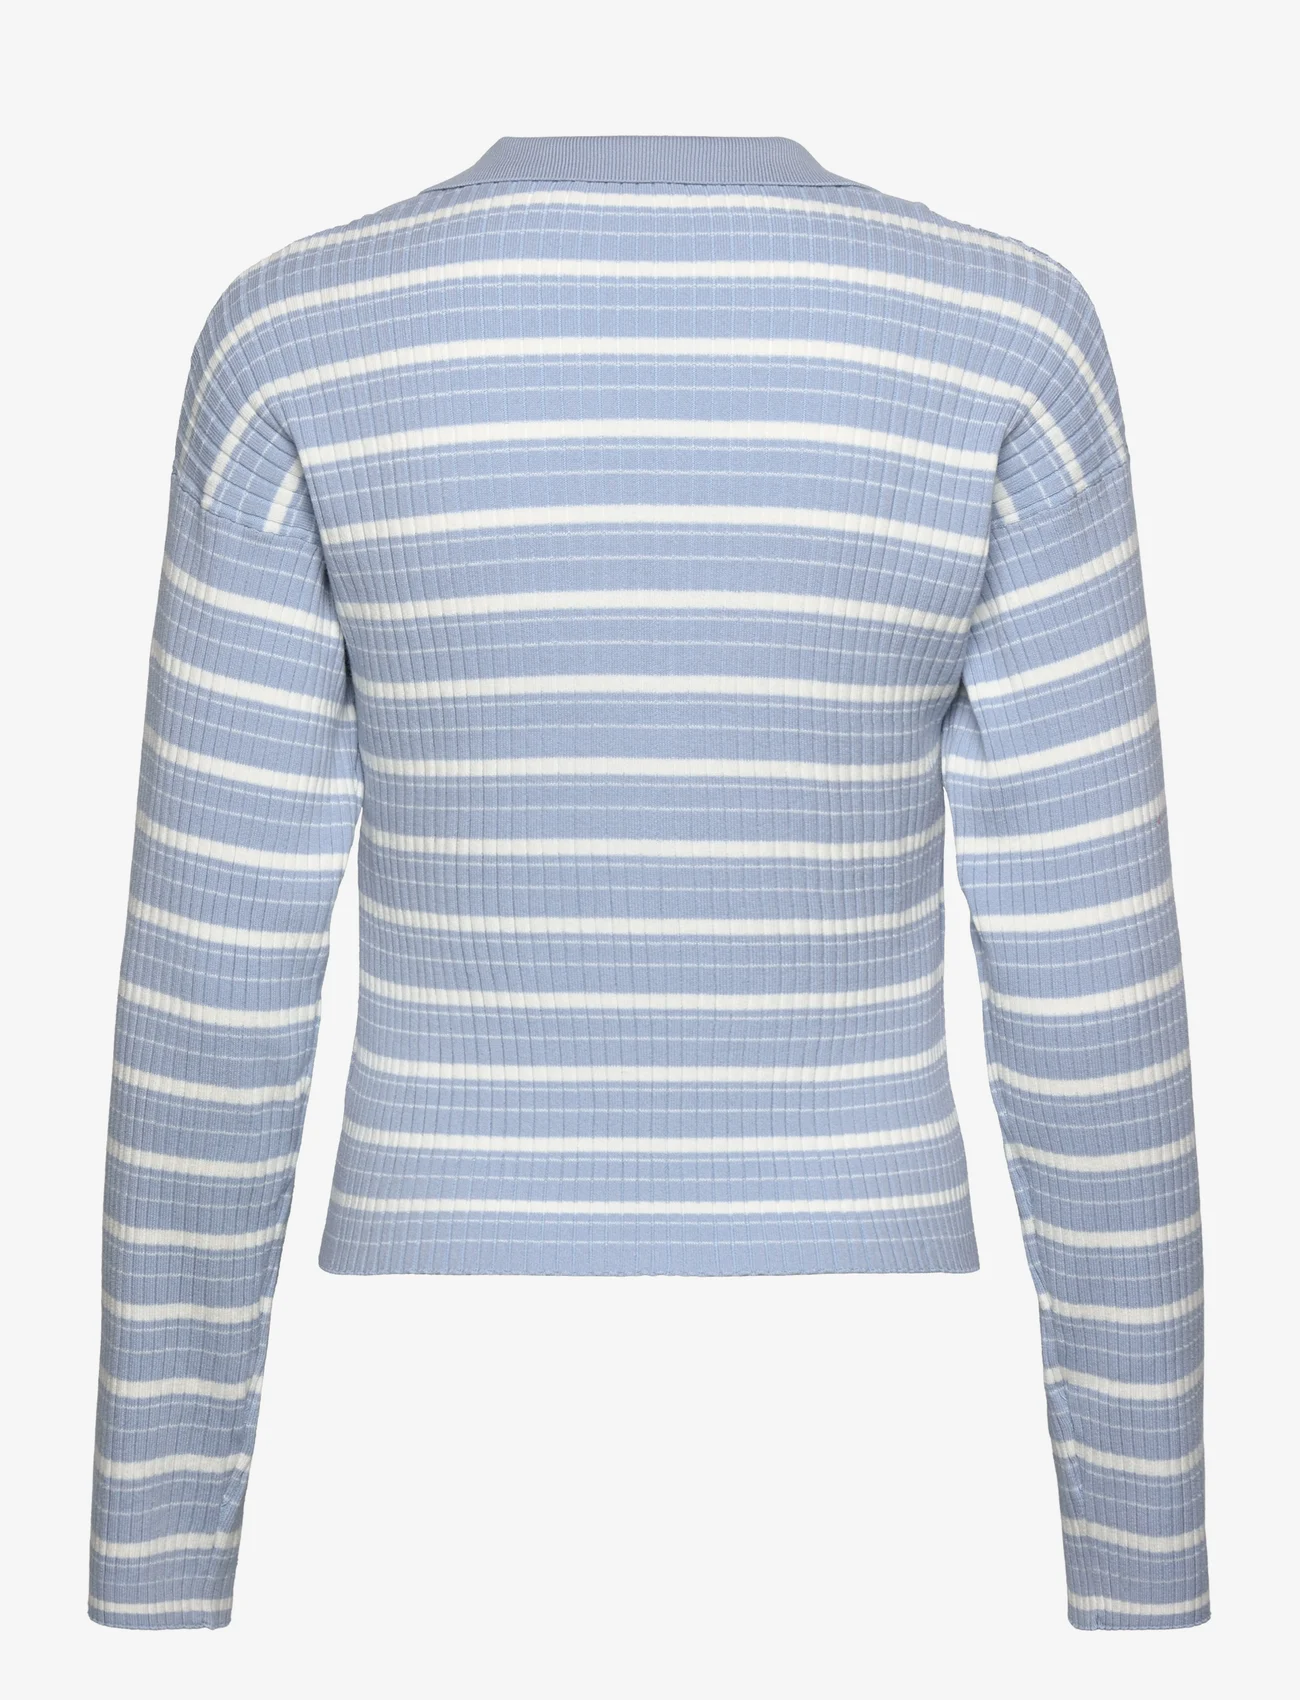 Esme Studios - ESAura Polo Knit - džemperi - blue fog stripes - 1